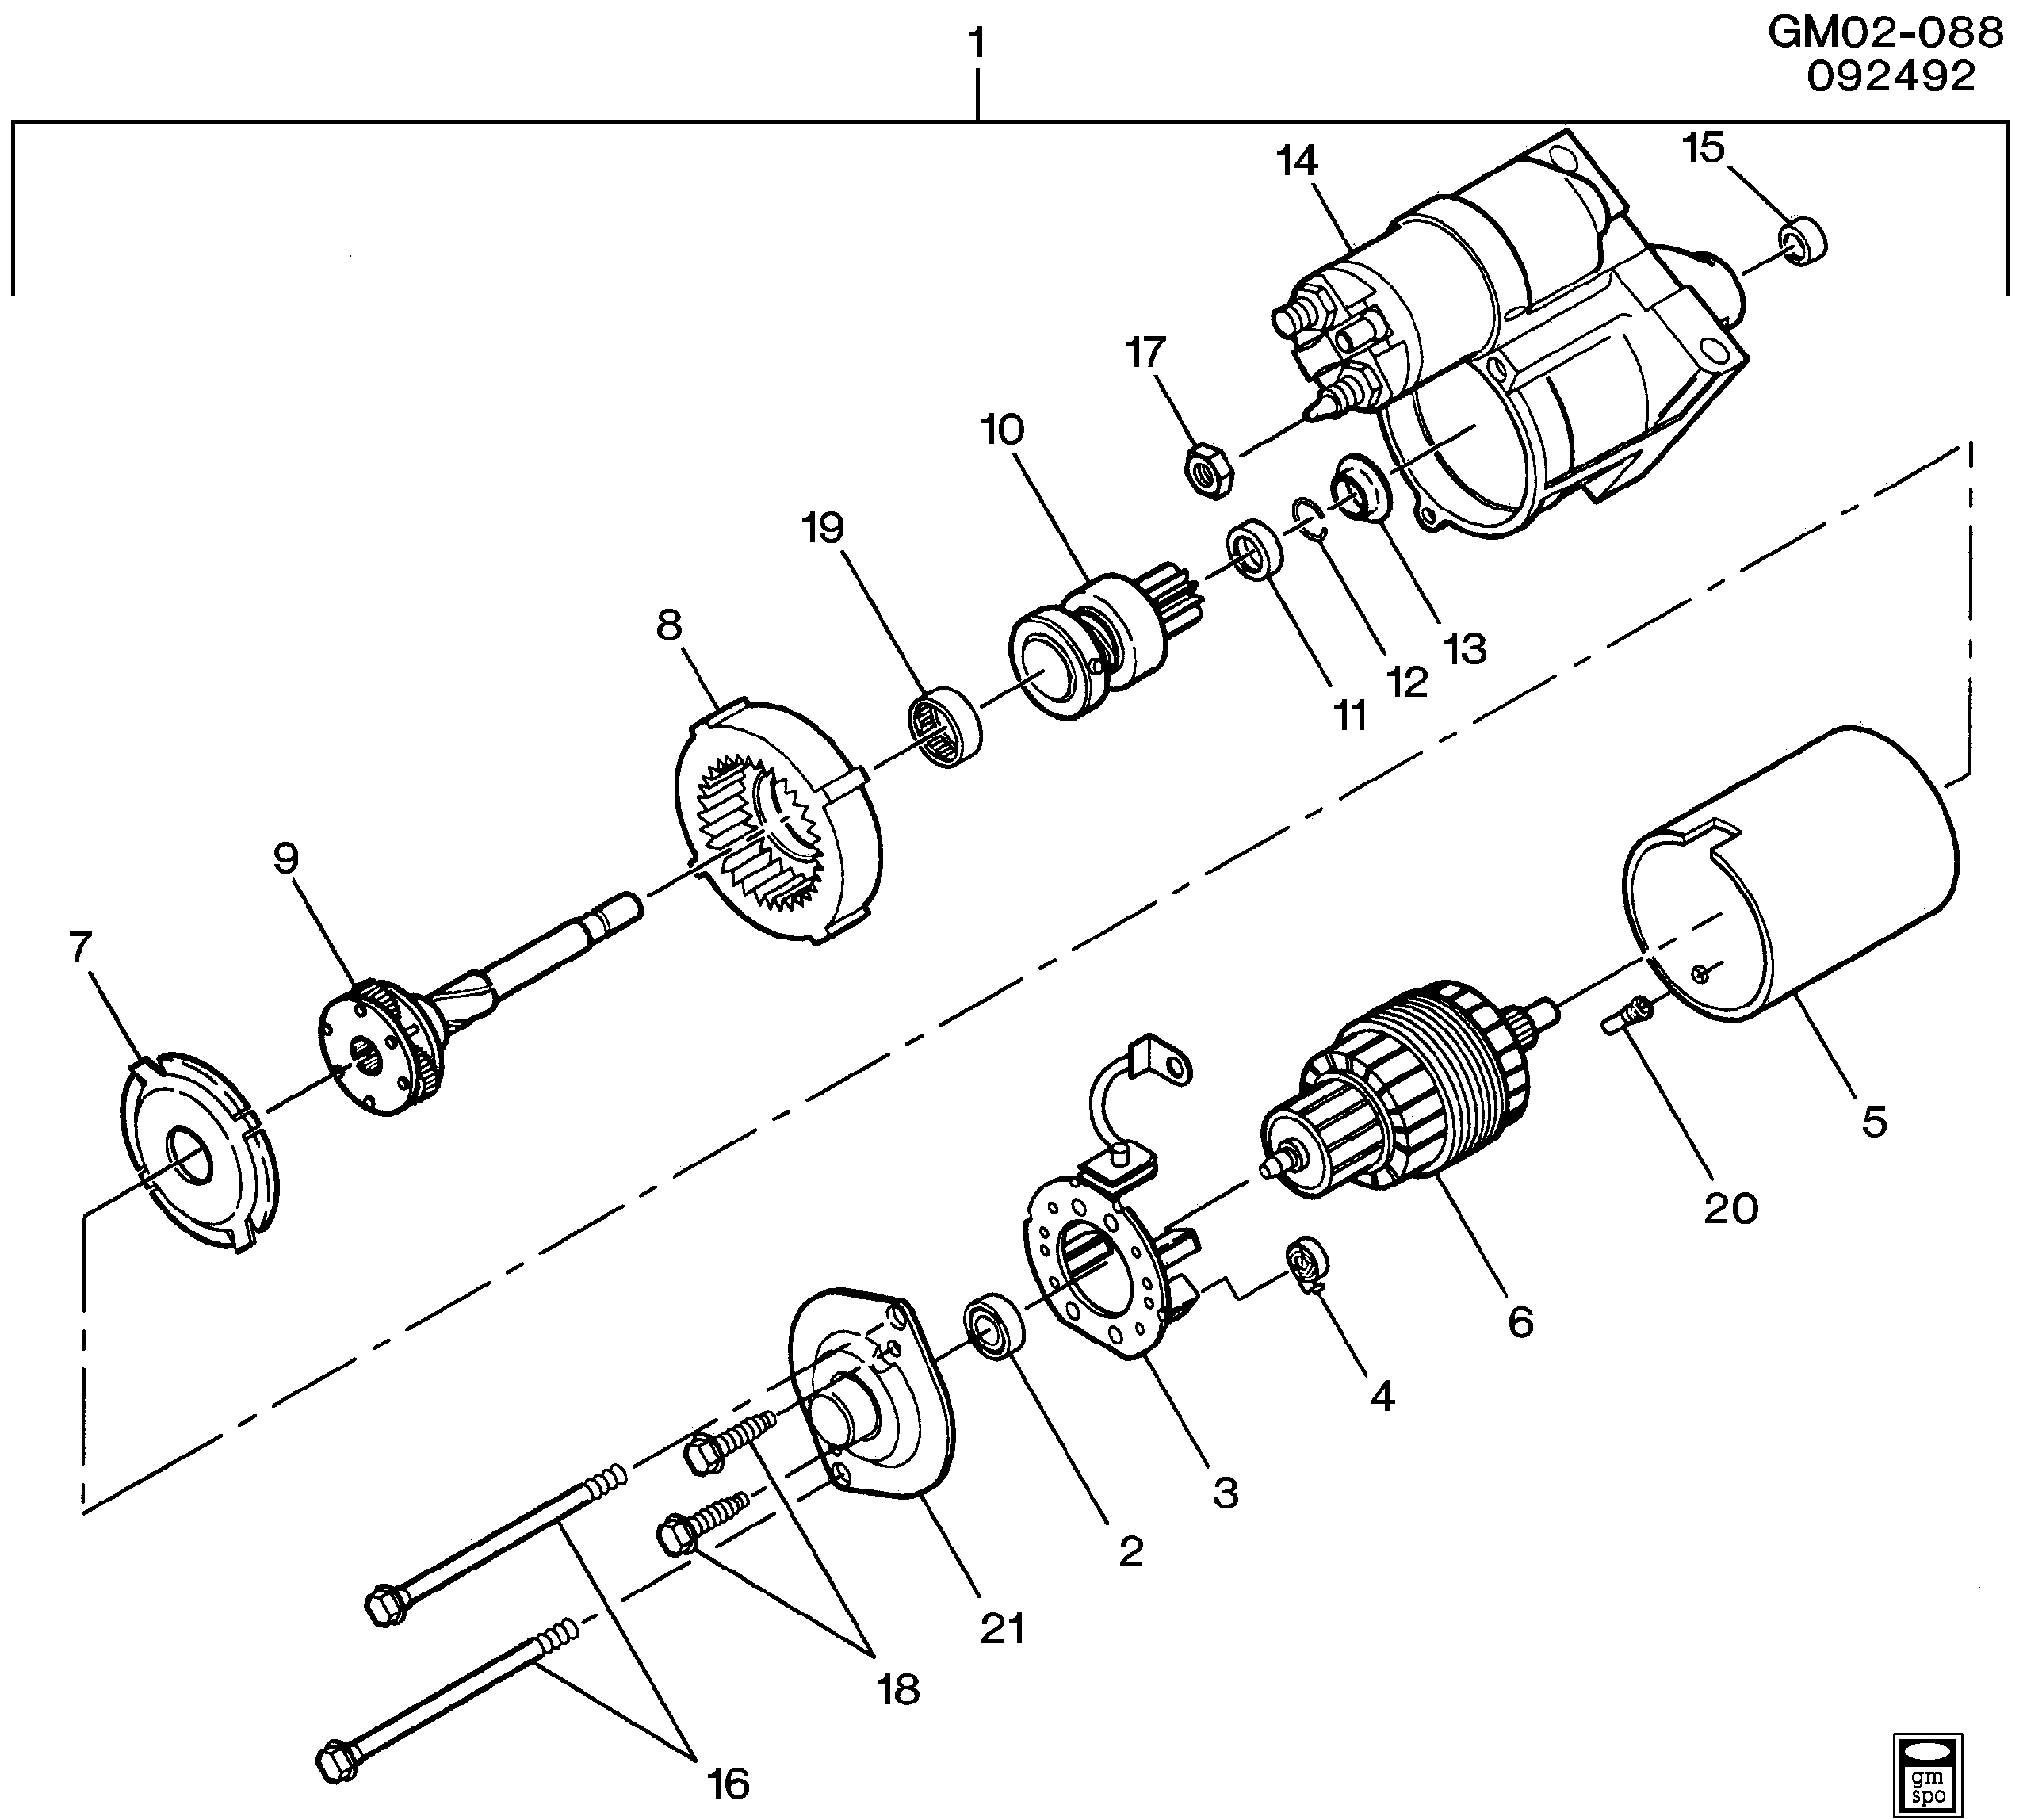 1997-1997 W STARTER MOTOR (L67/3.8-1)